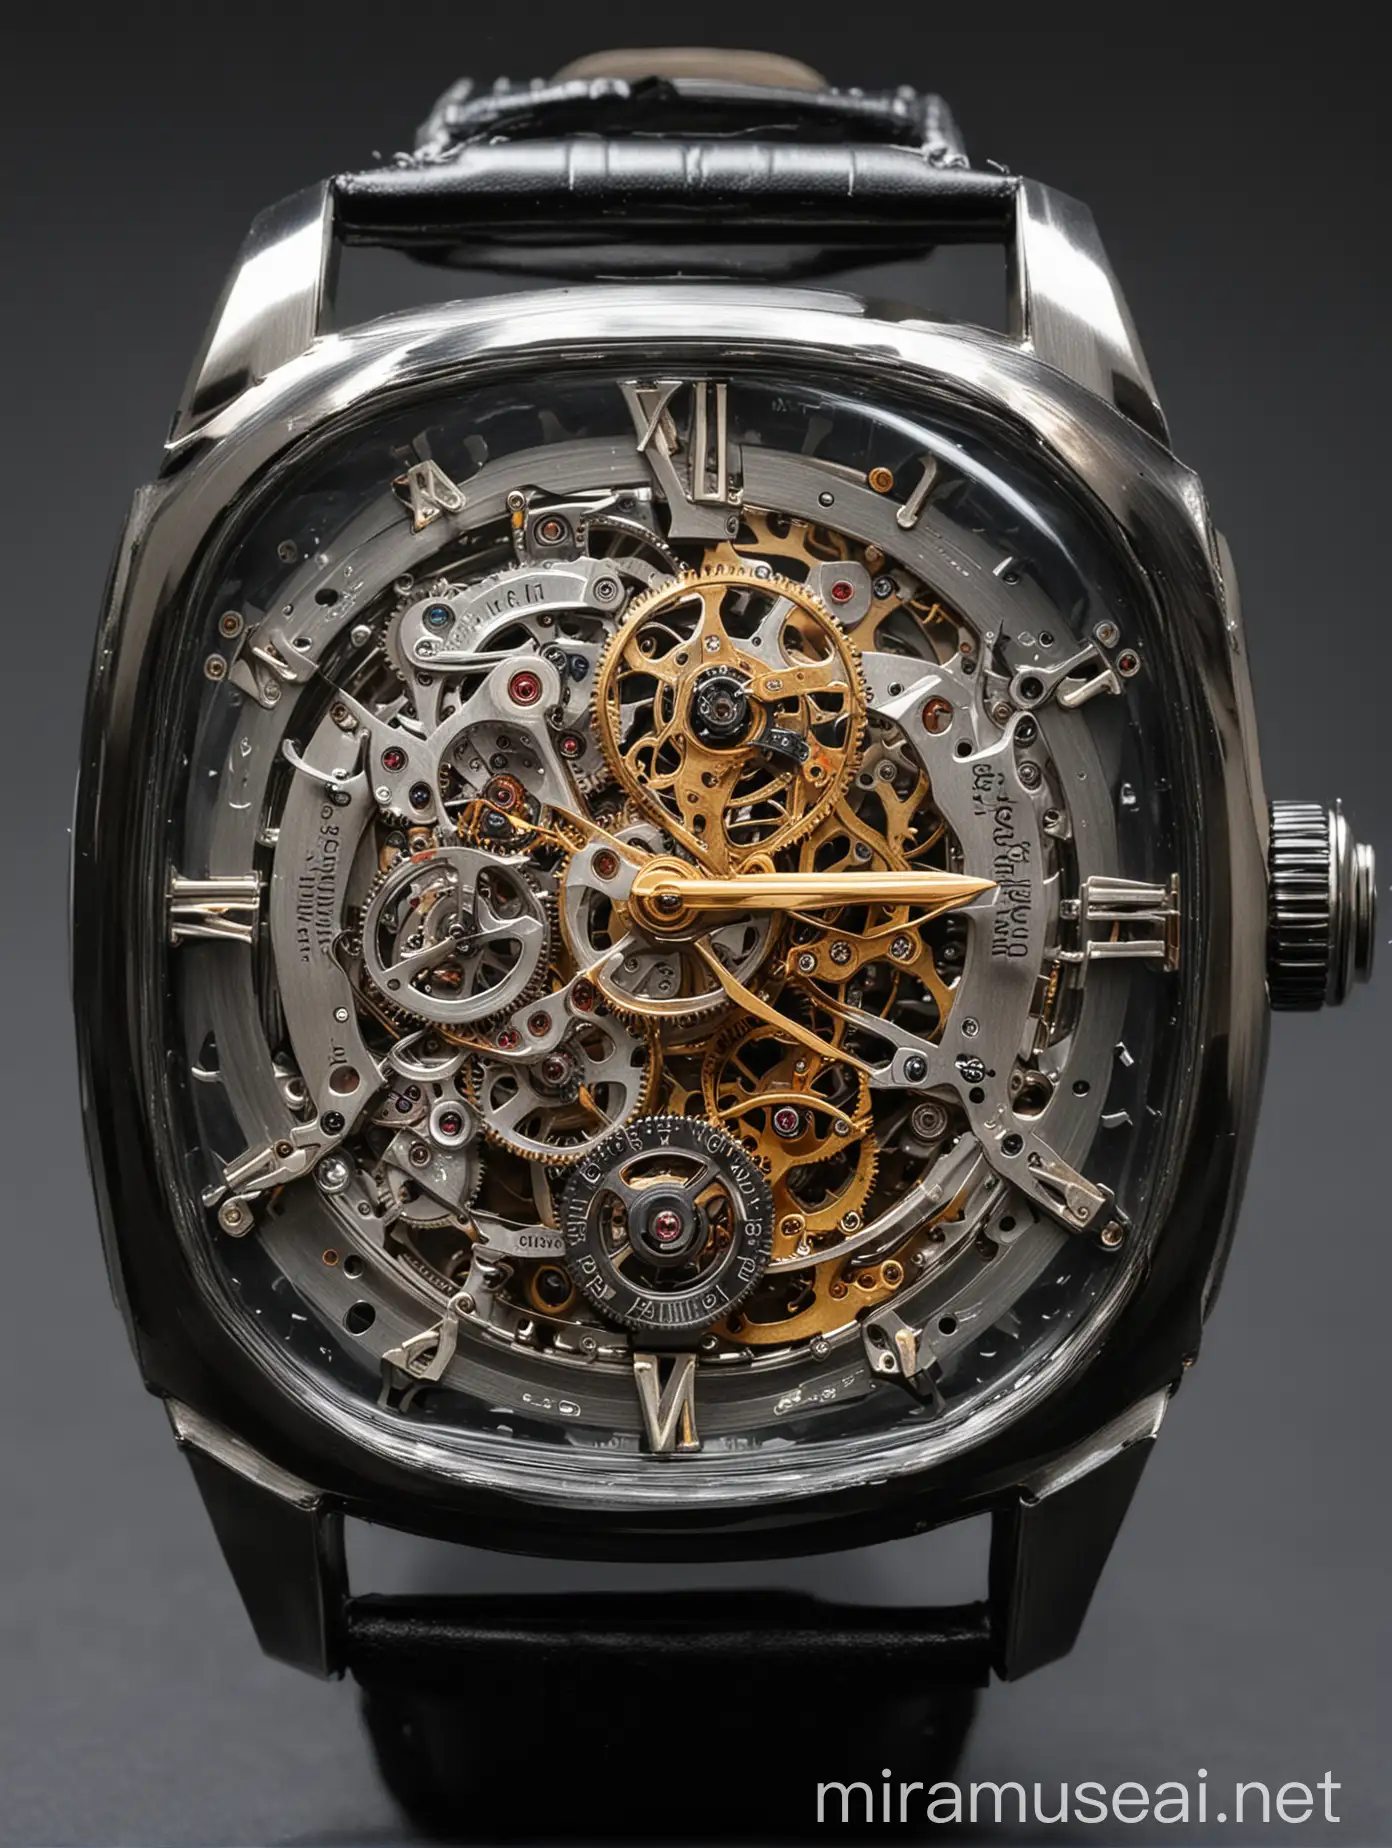 Elegant Mechanical Watch with Intricate Gear Mechanism